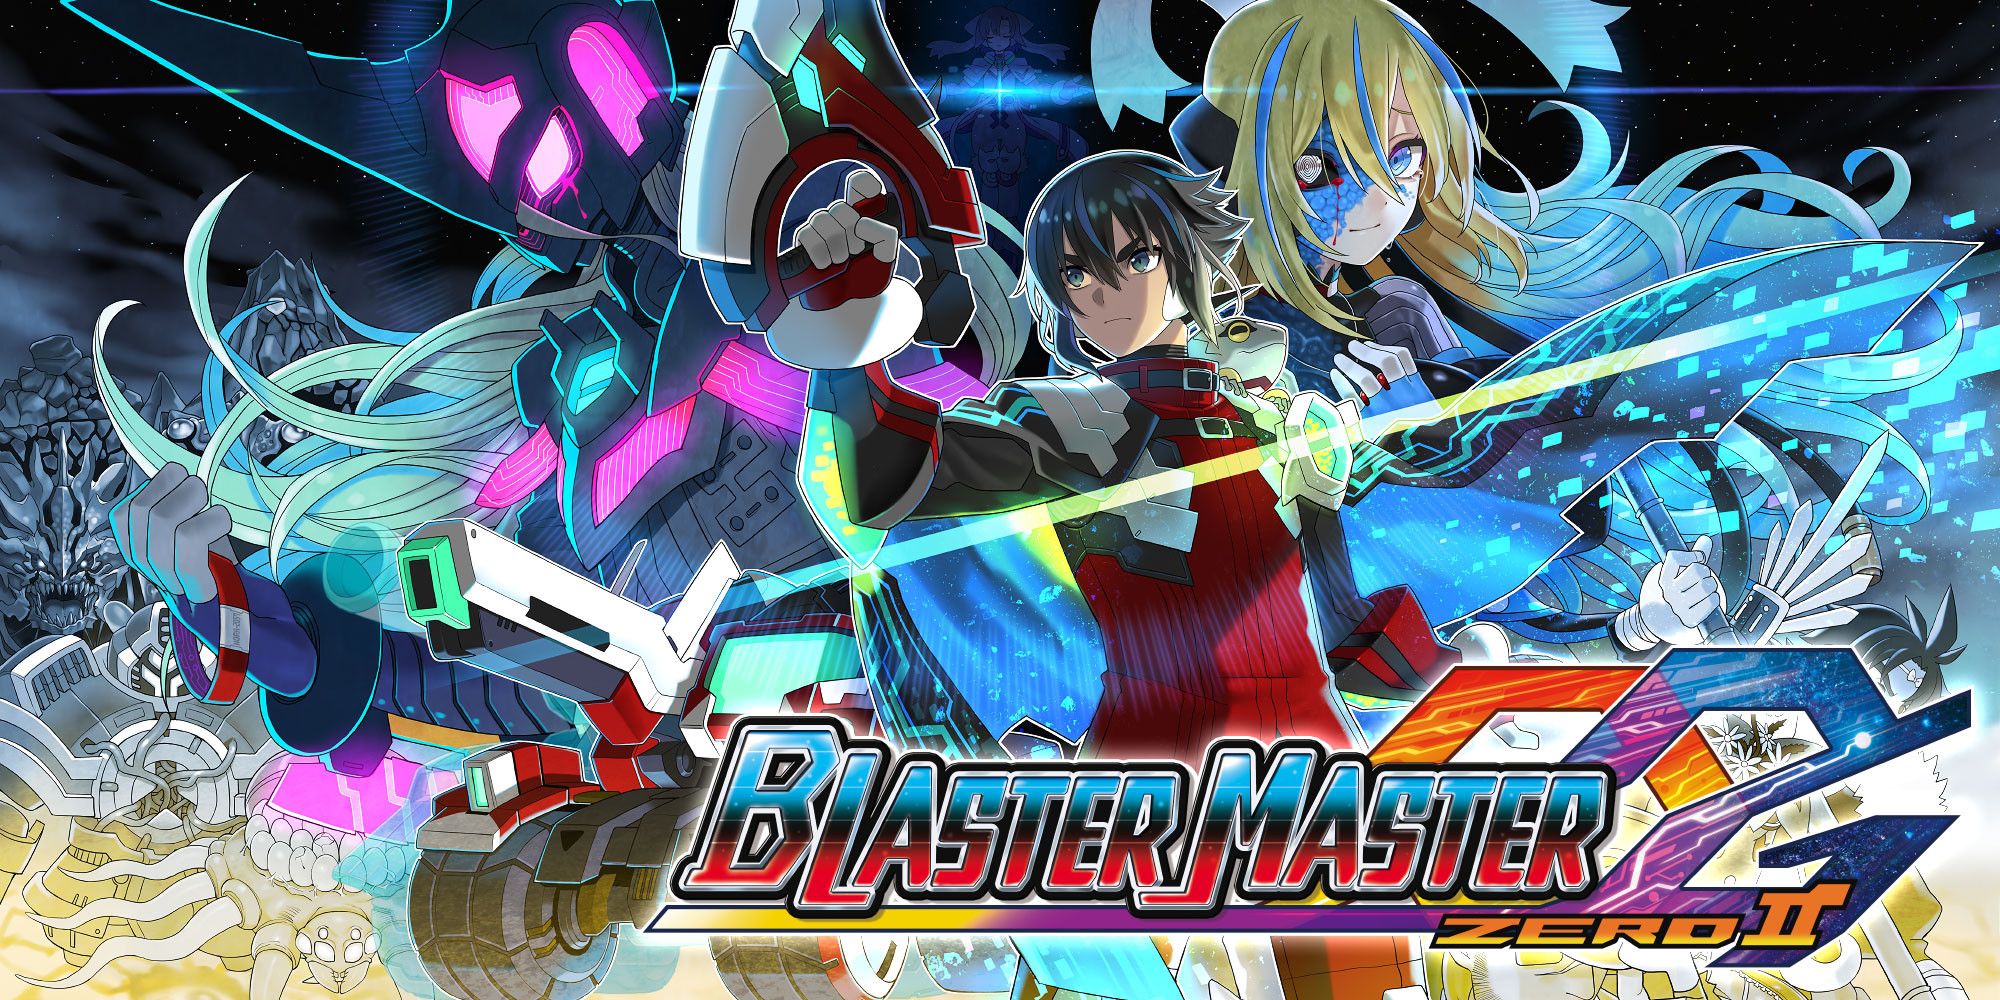 Jaquette Blaster Master Zero 2